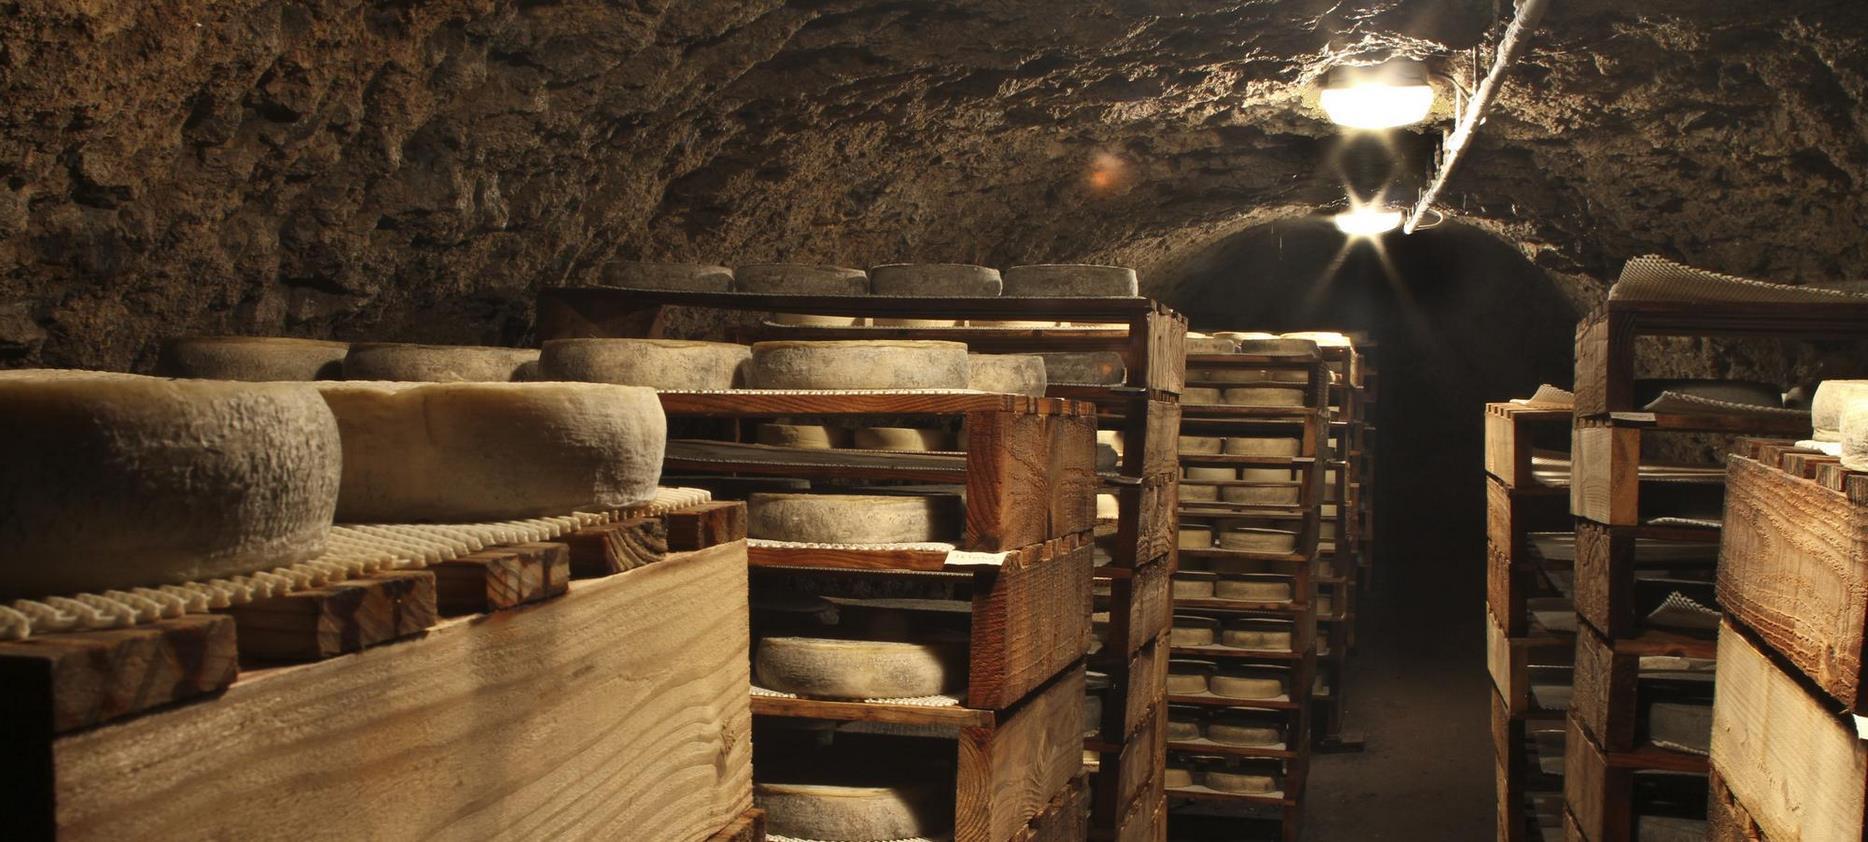 AOP Auvergne cheese - Maturing cellar of Saint Nectaire